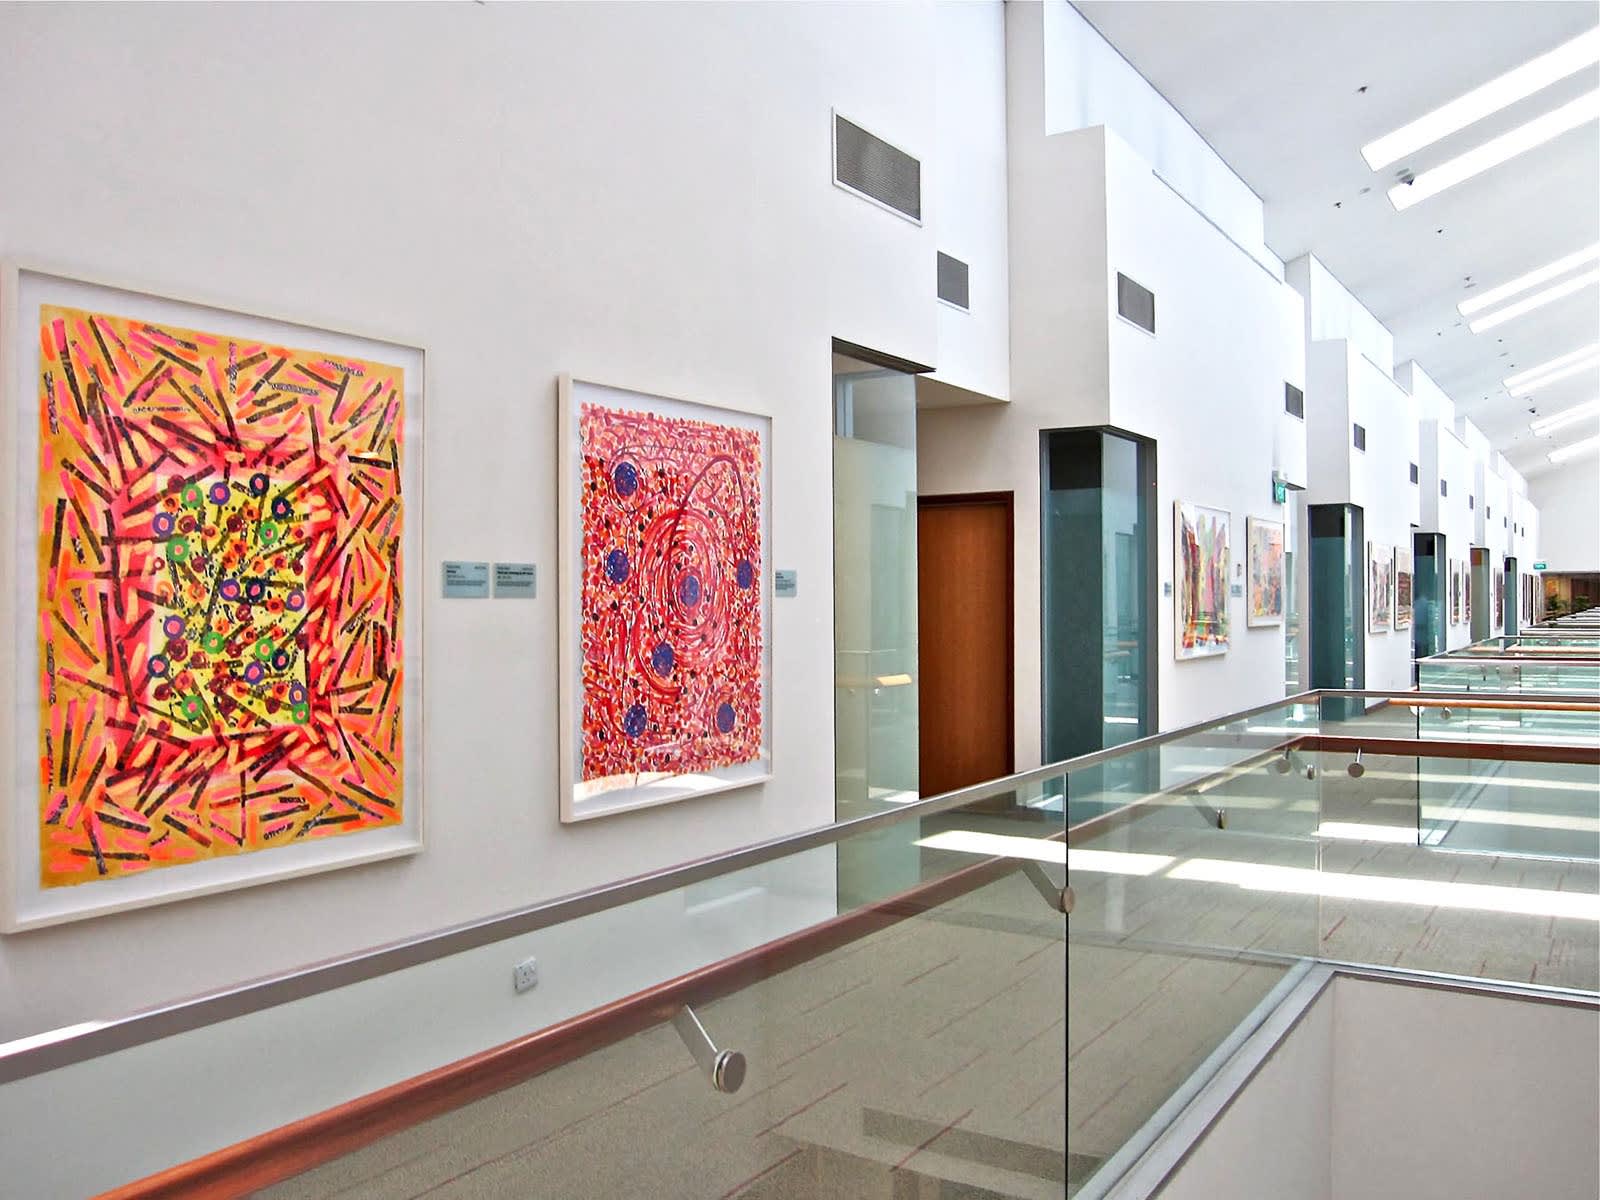 Pacita Abad Gallery at Singapore Management University